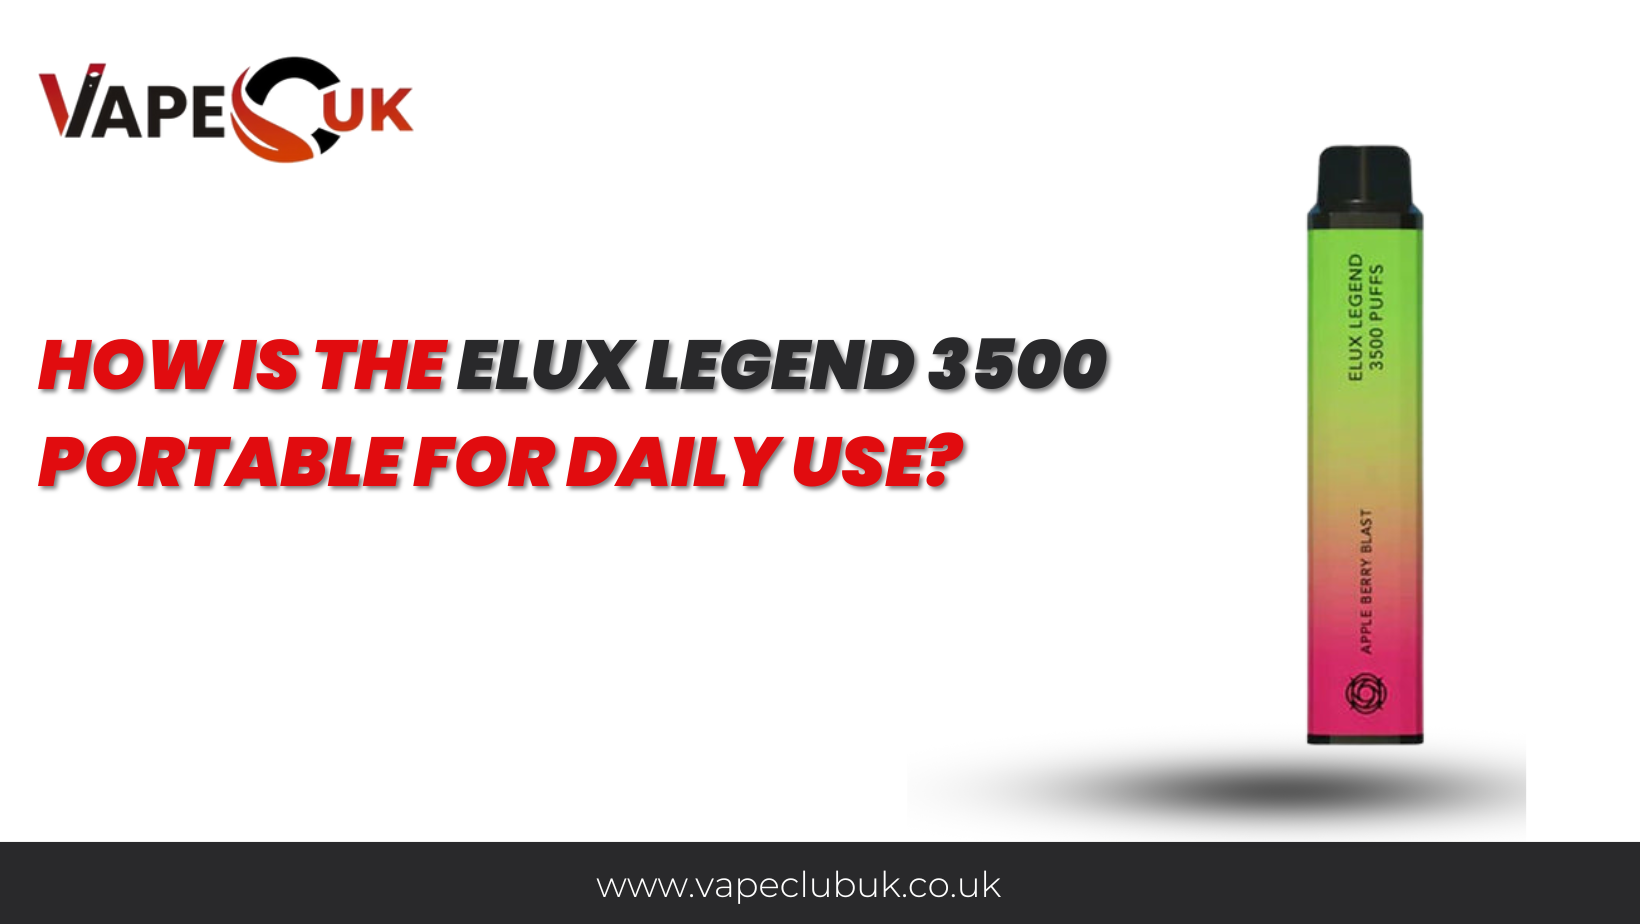 Elux Legend 3500